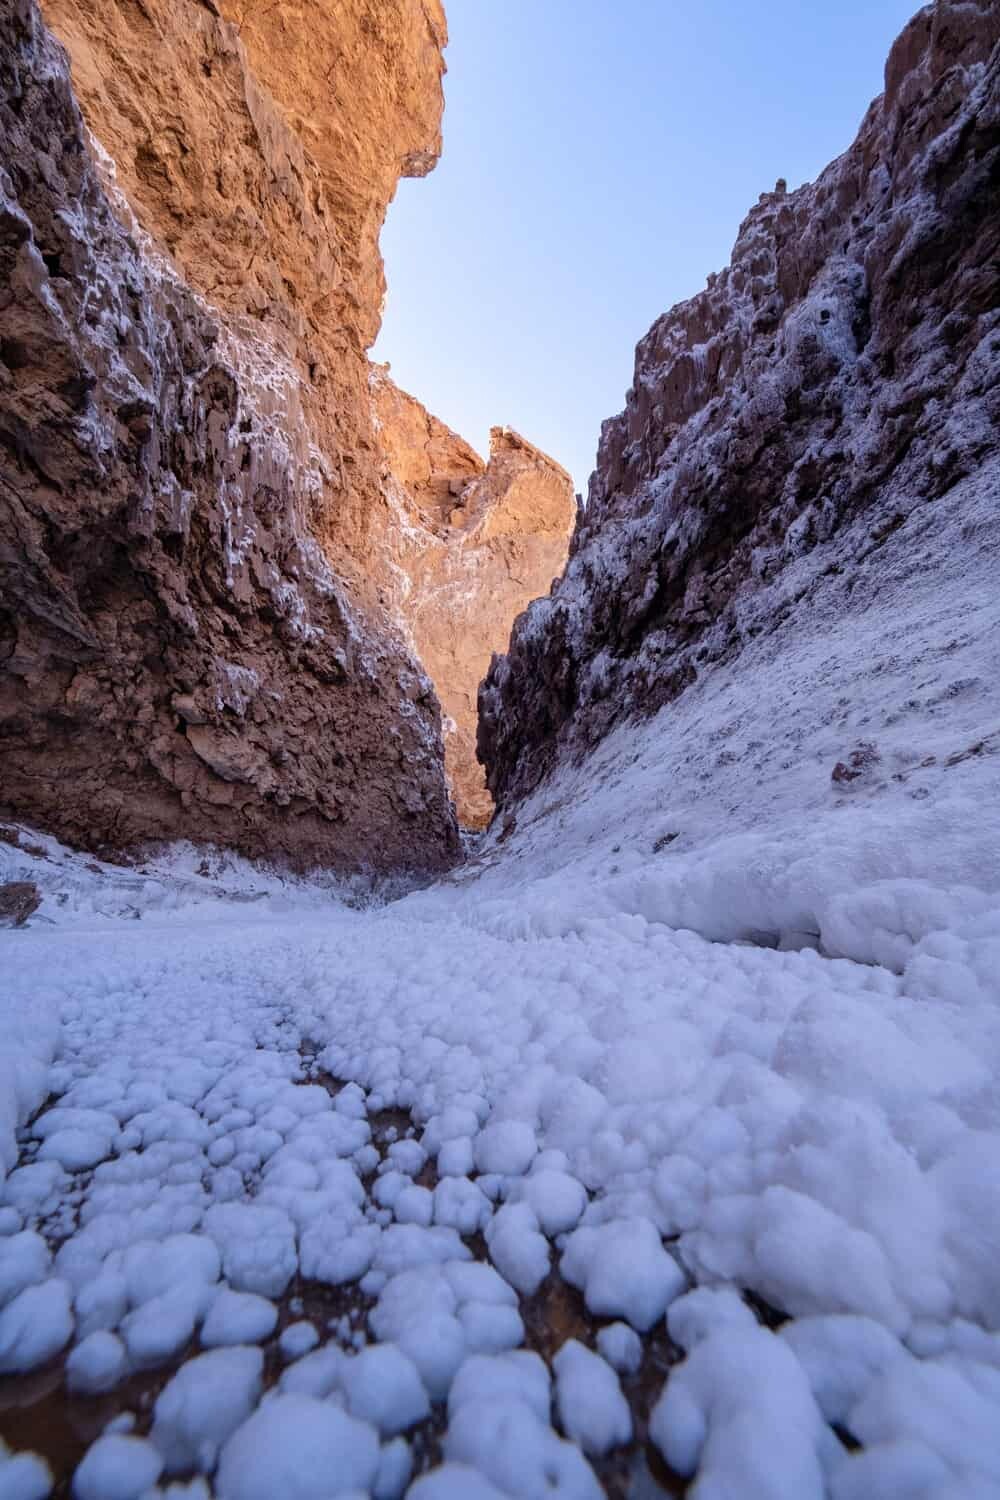 Kari Gorge, Atacama Desert, Chile-12-2